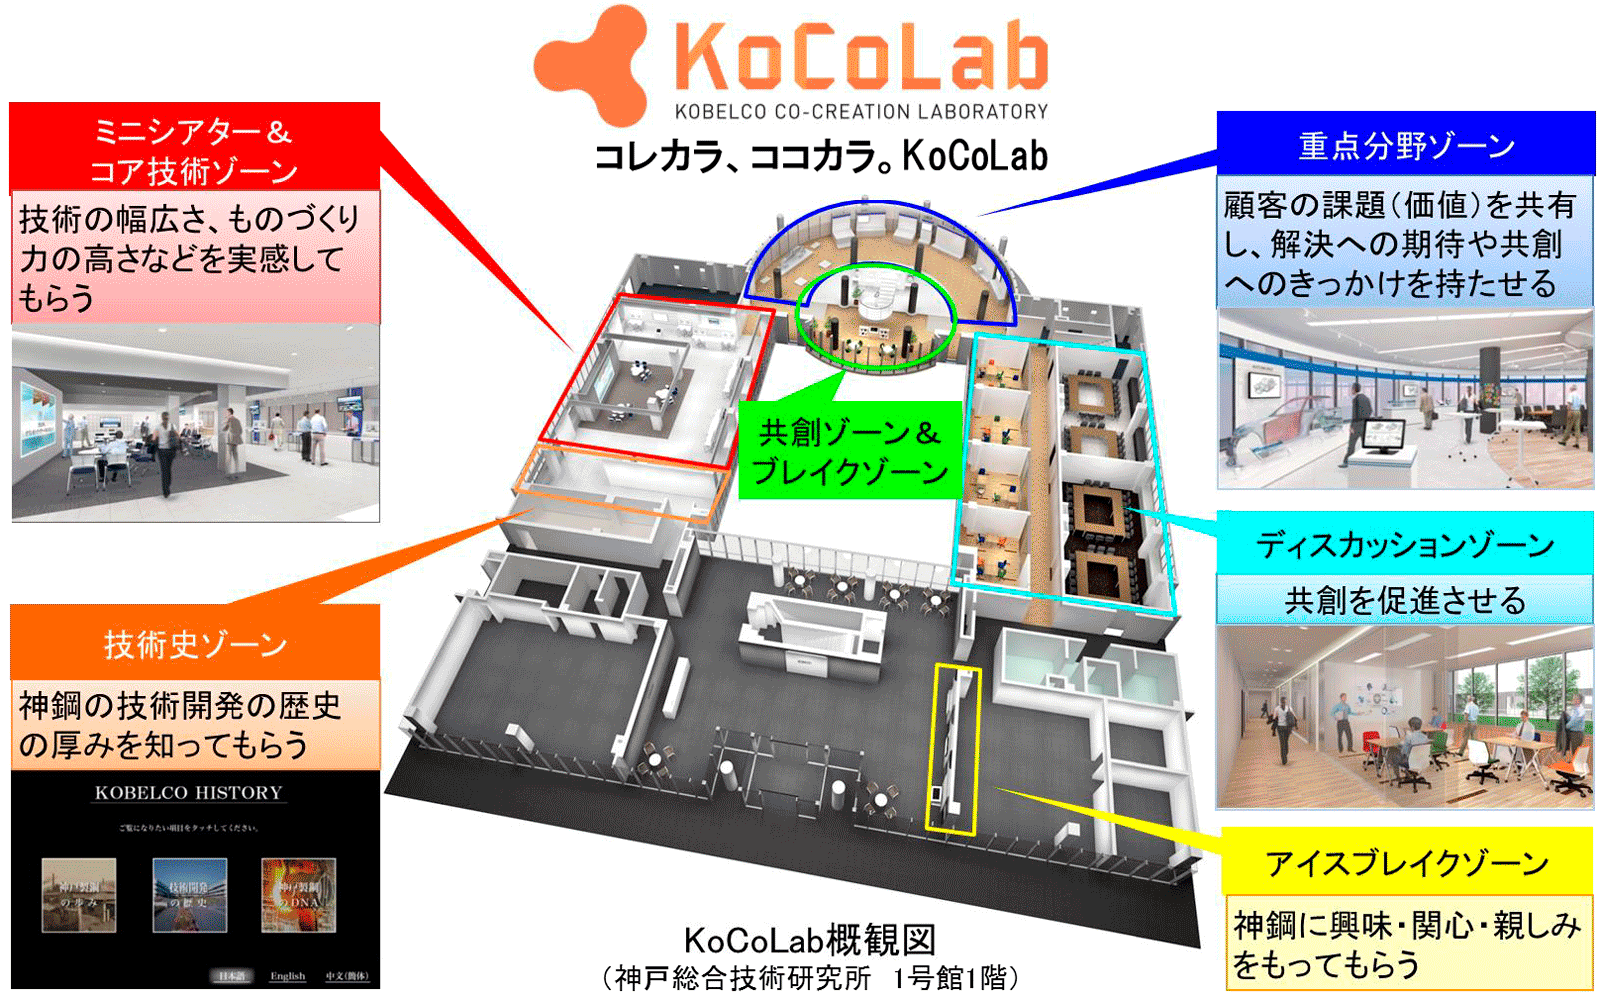 KOBELCO Co-creation Laboratory（KoCoLab ここらぼ）